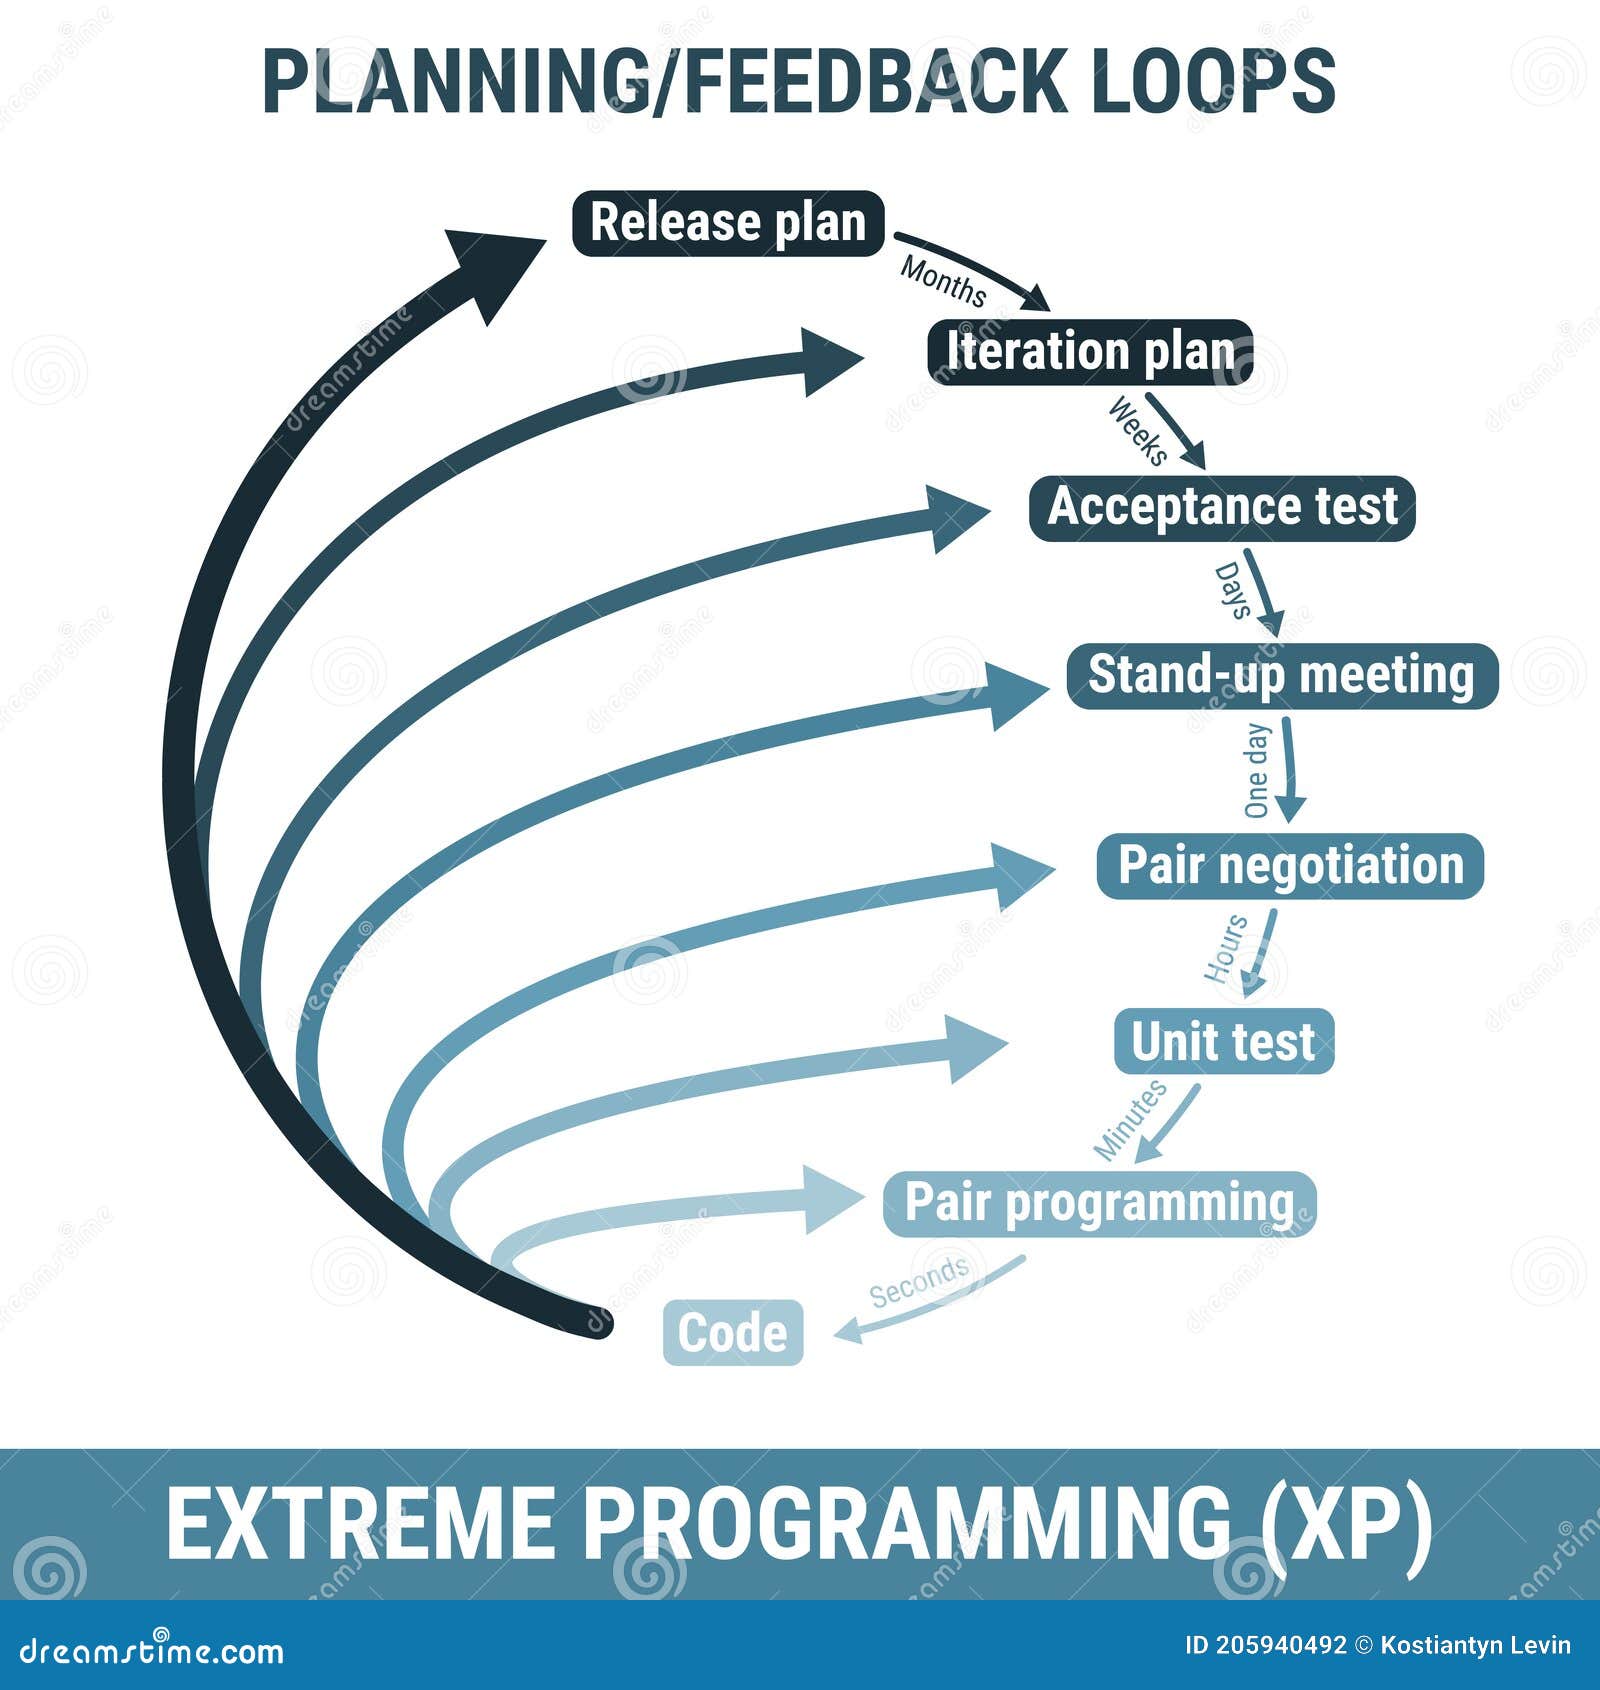 xp extreme programming software development methodology, detailed framework process scheme